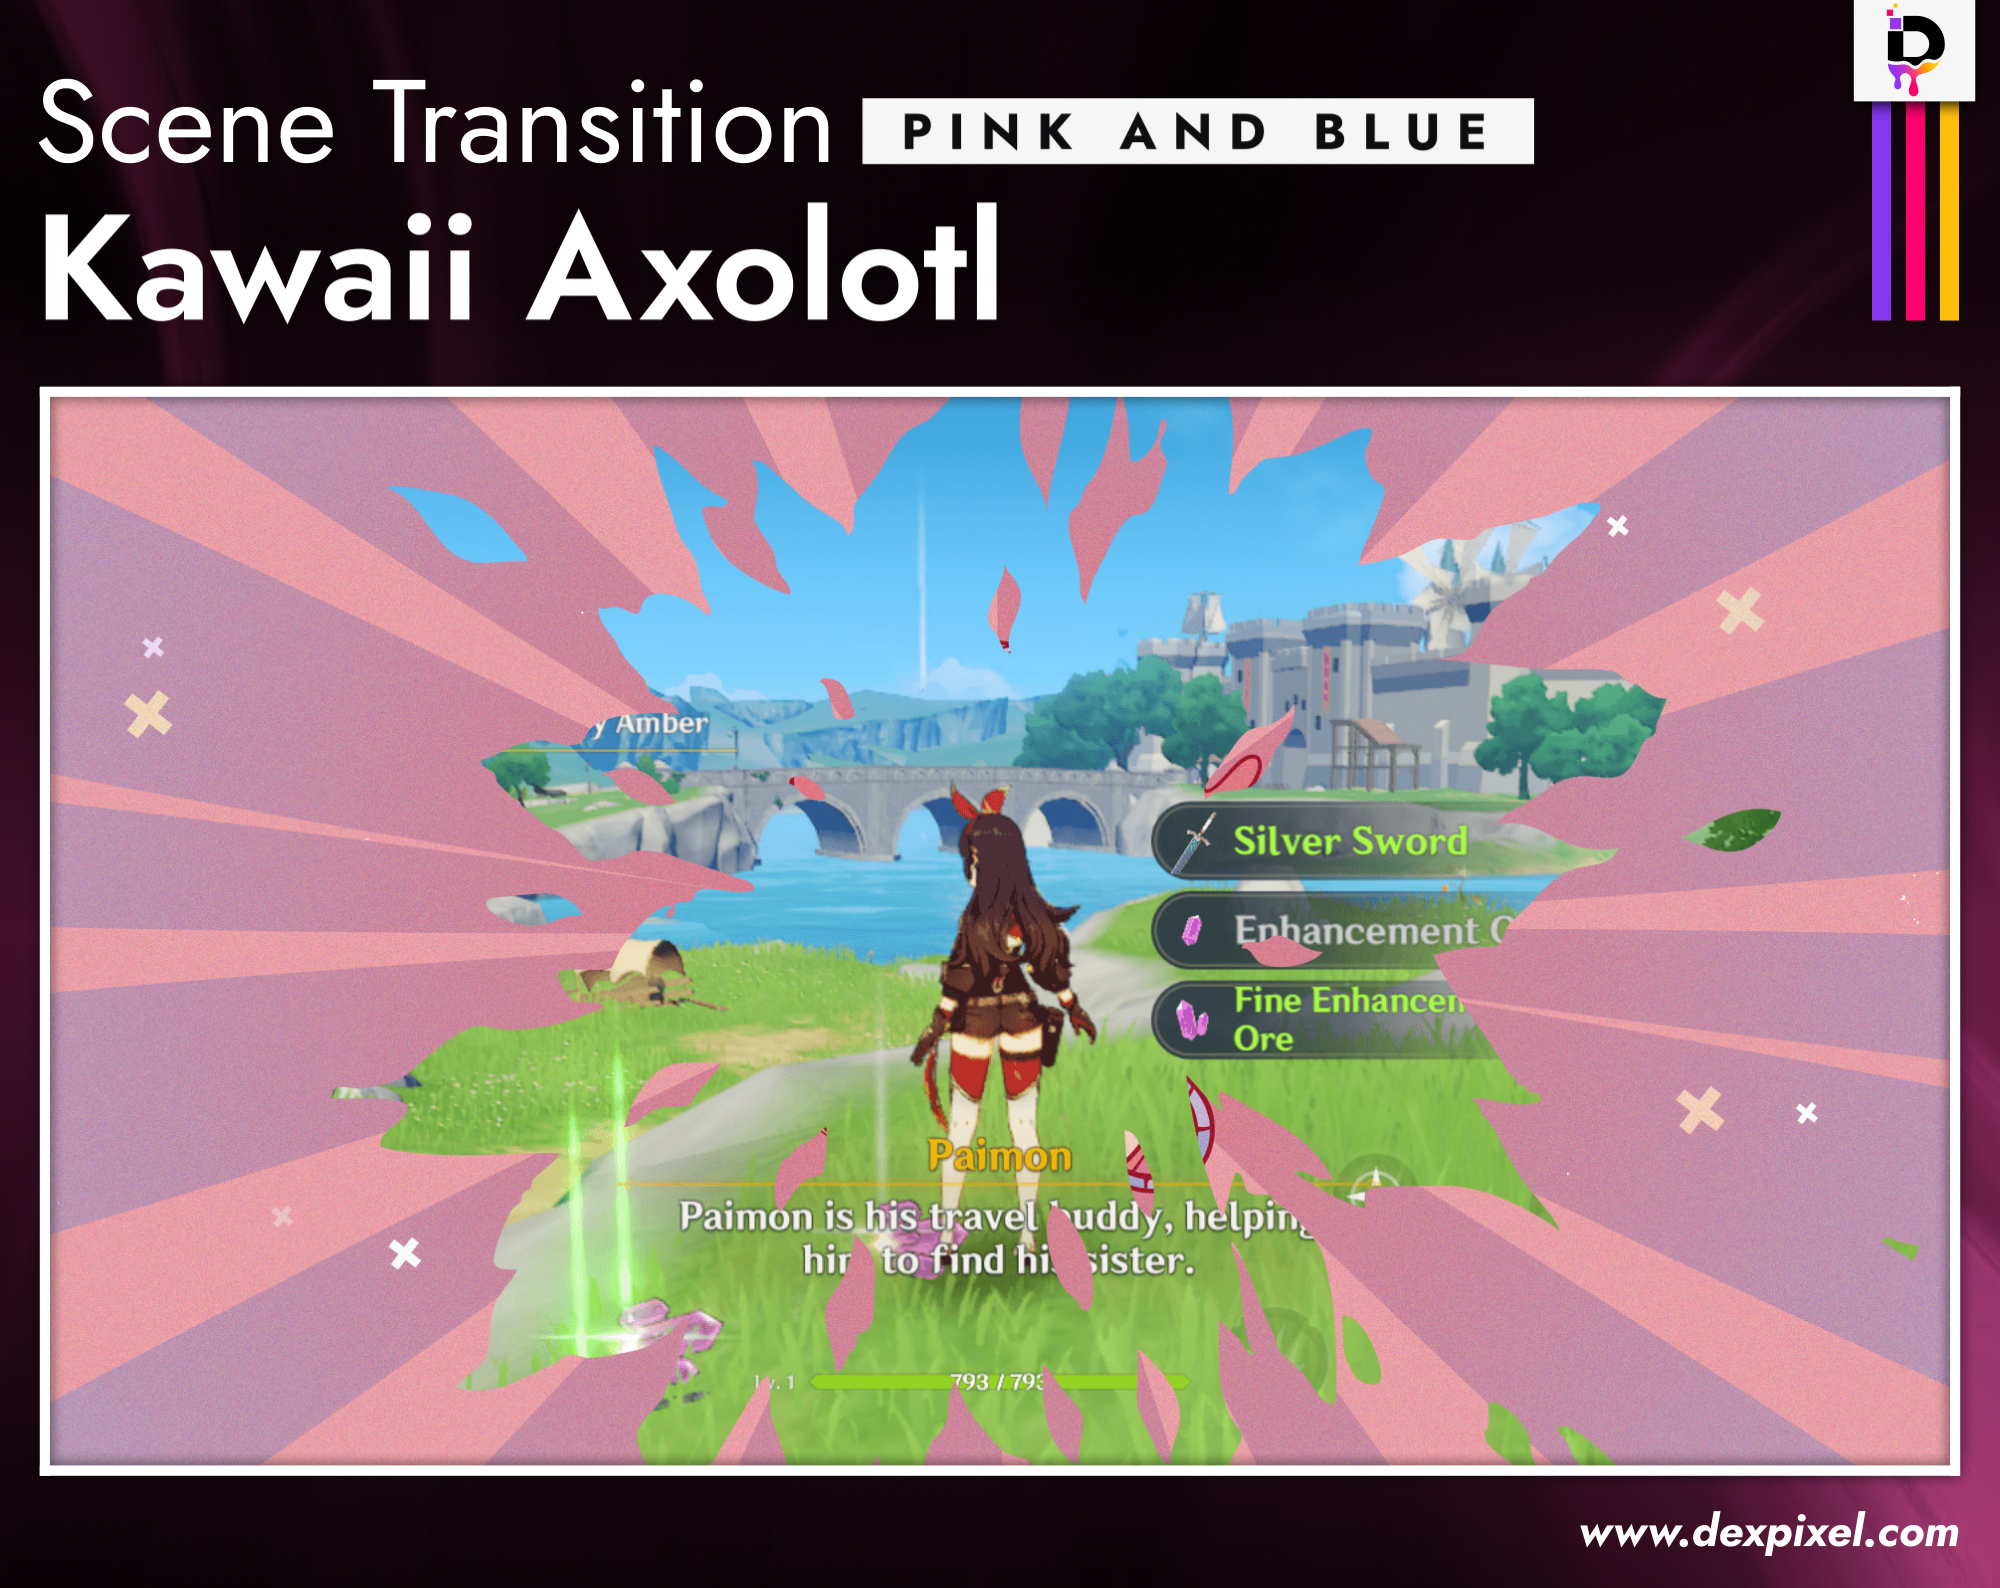 Scene Transition Dexpixel 3 Kawaii Axolotl Pink And Blue